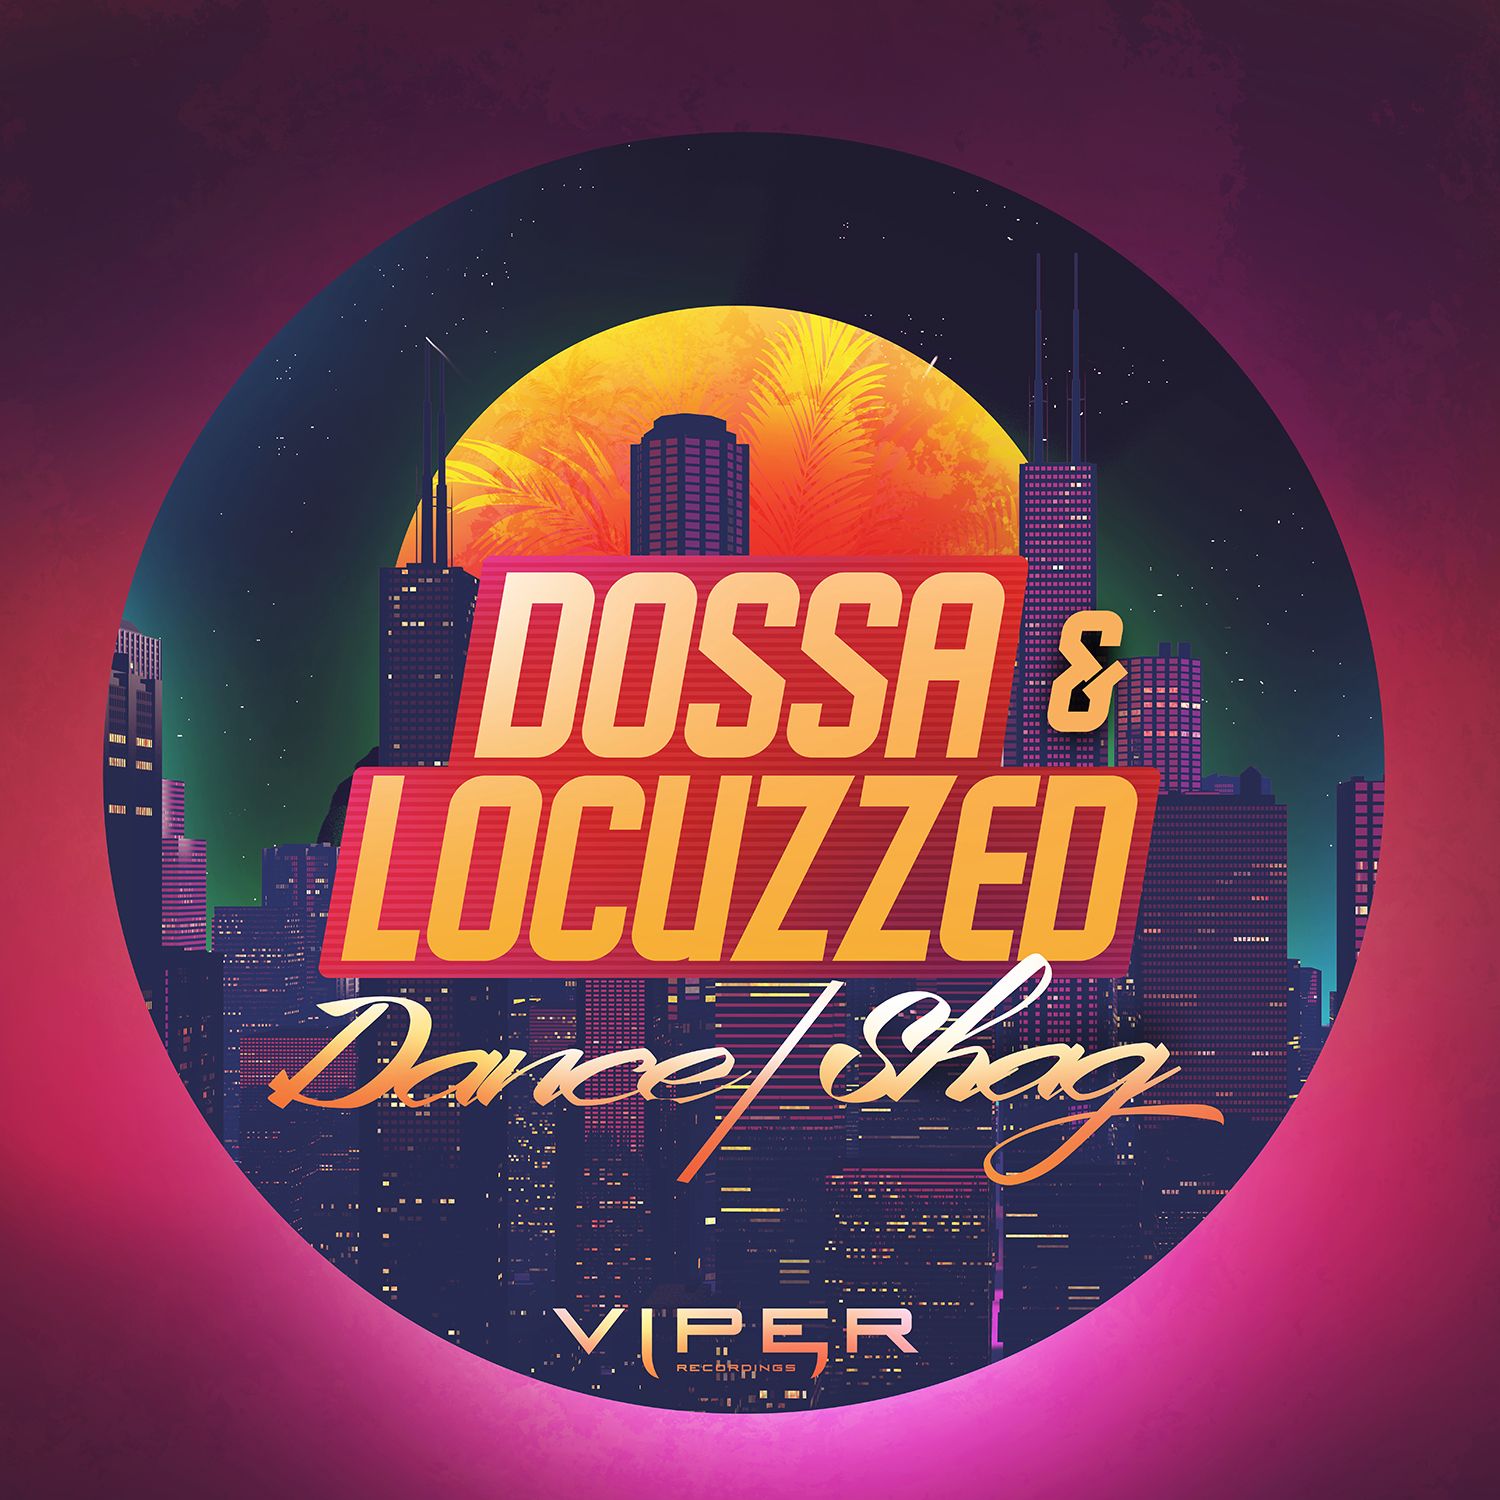 Dossa & Locuzzed - Shag